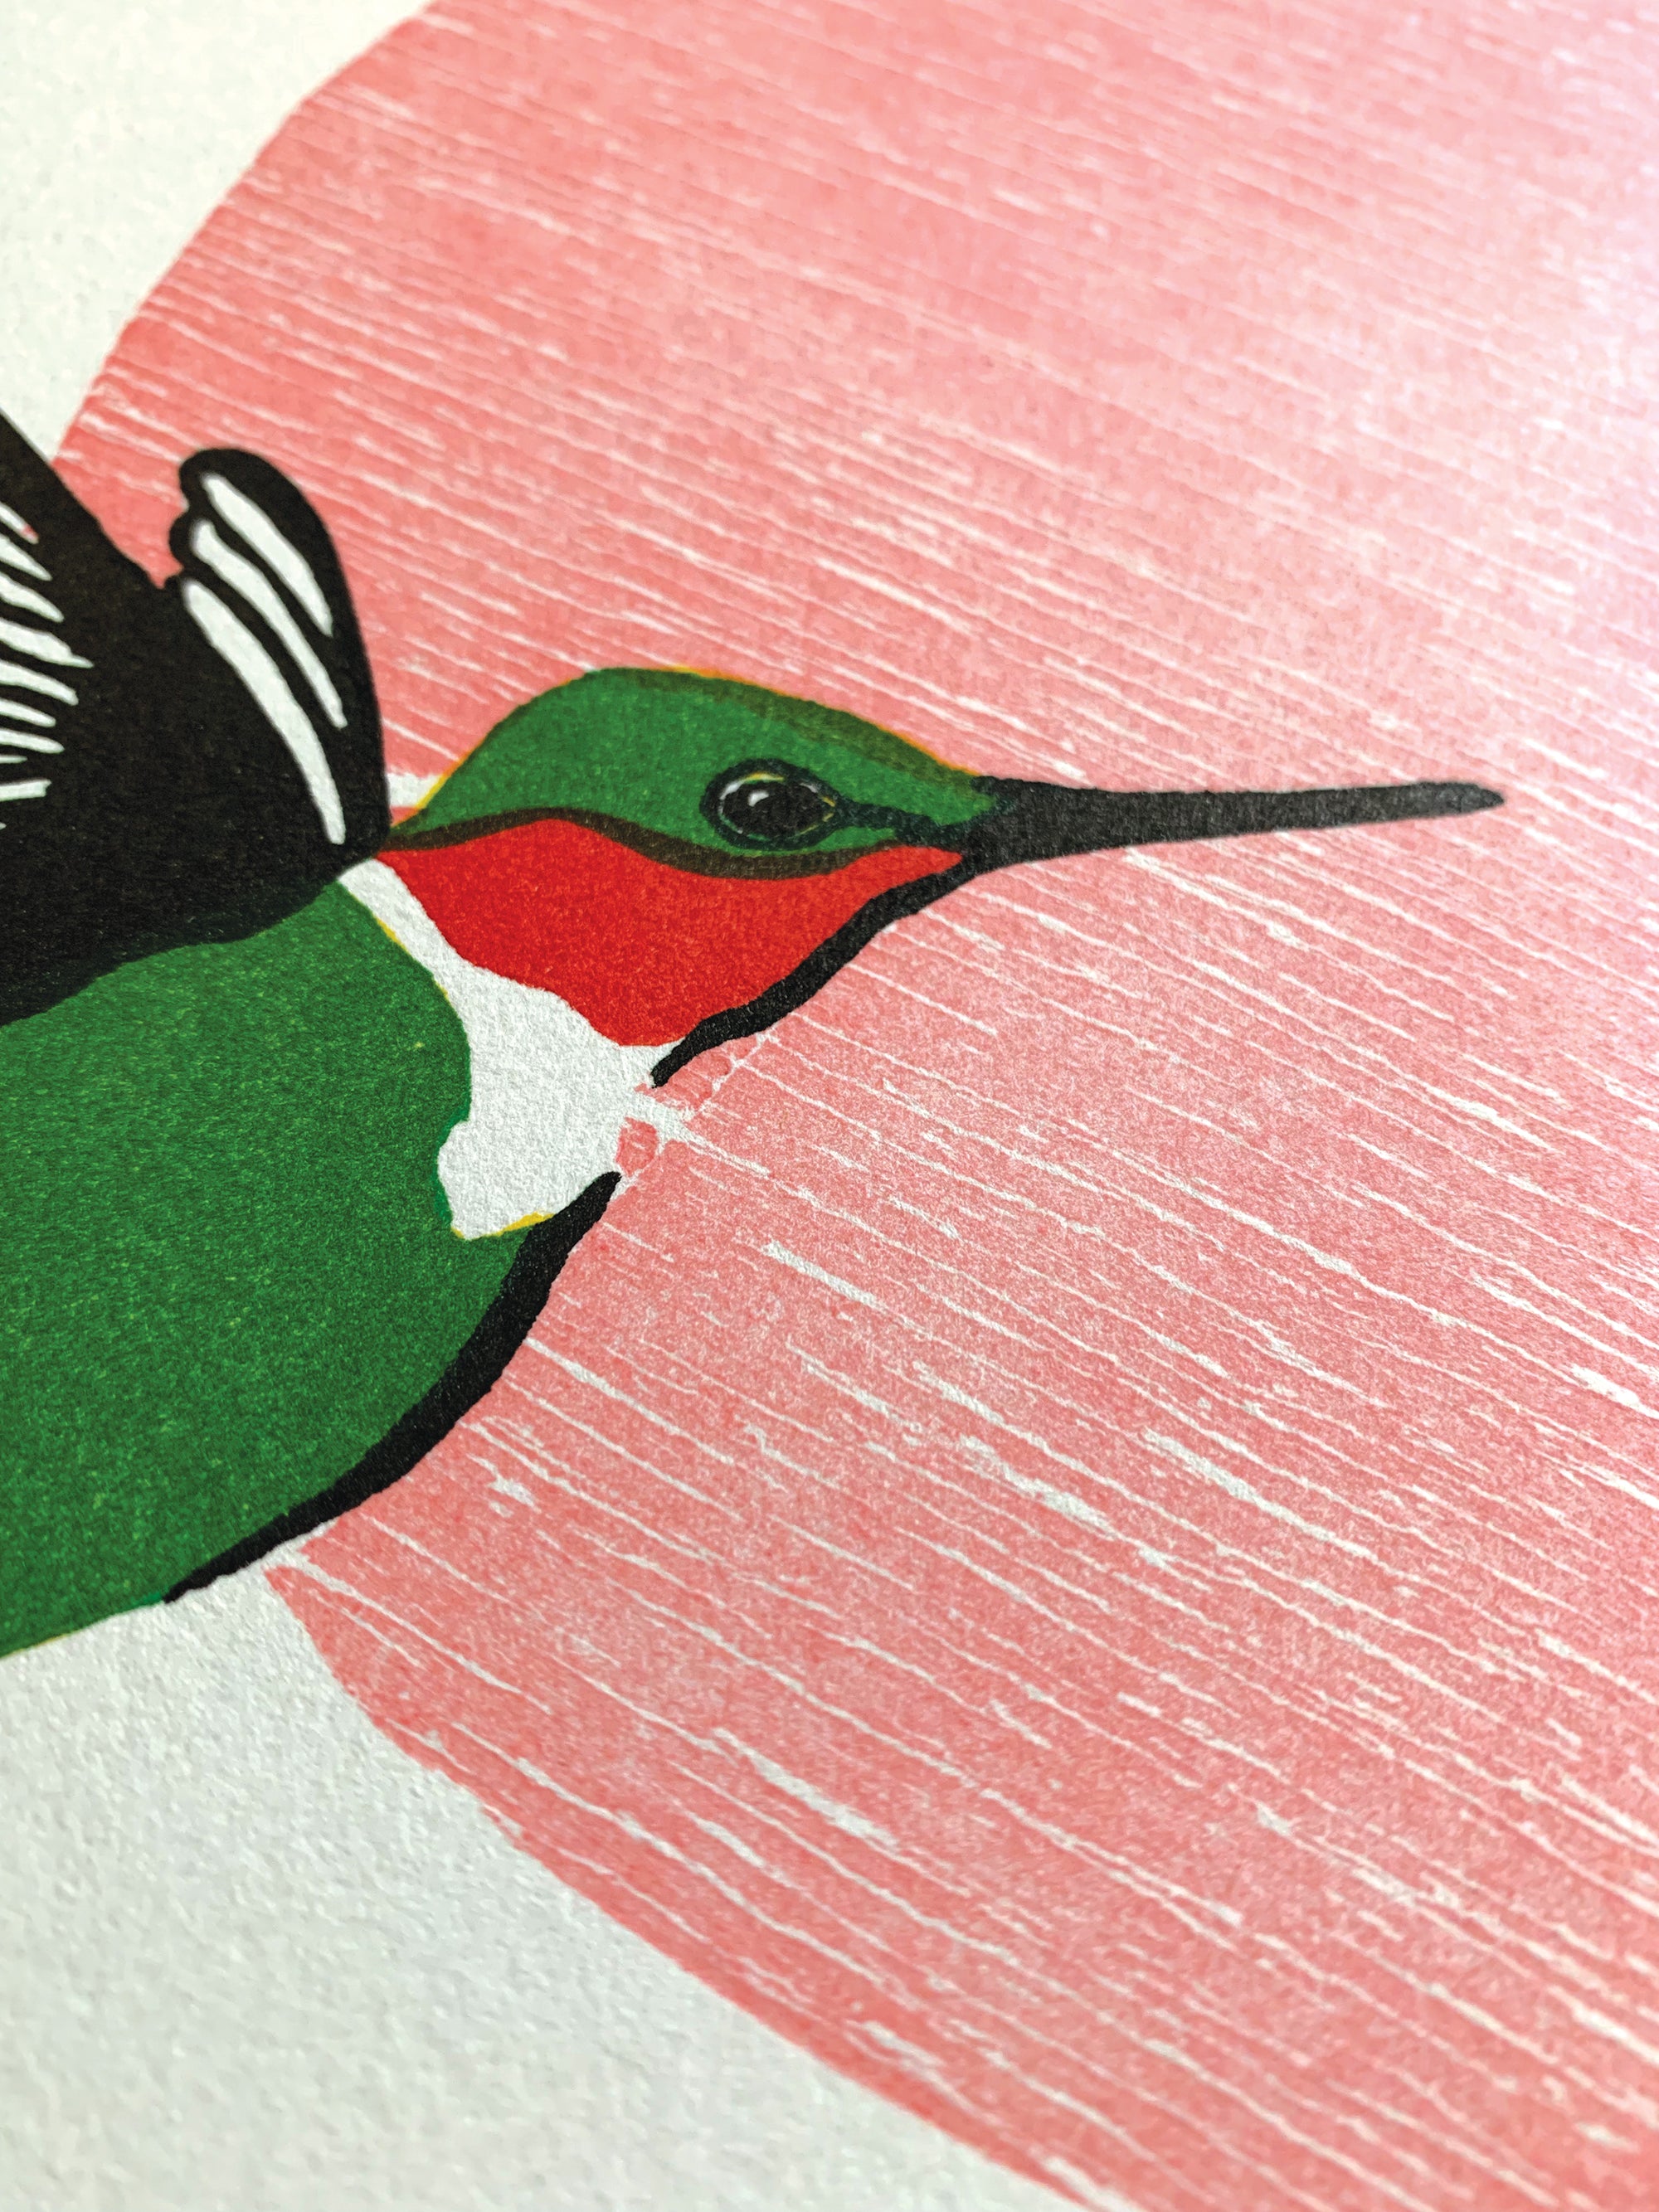 Ruby-Throated Hummingbird Fine Art Linoleum Block Letterpress Print